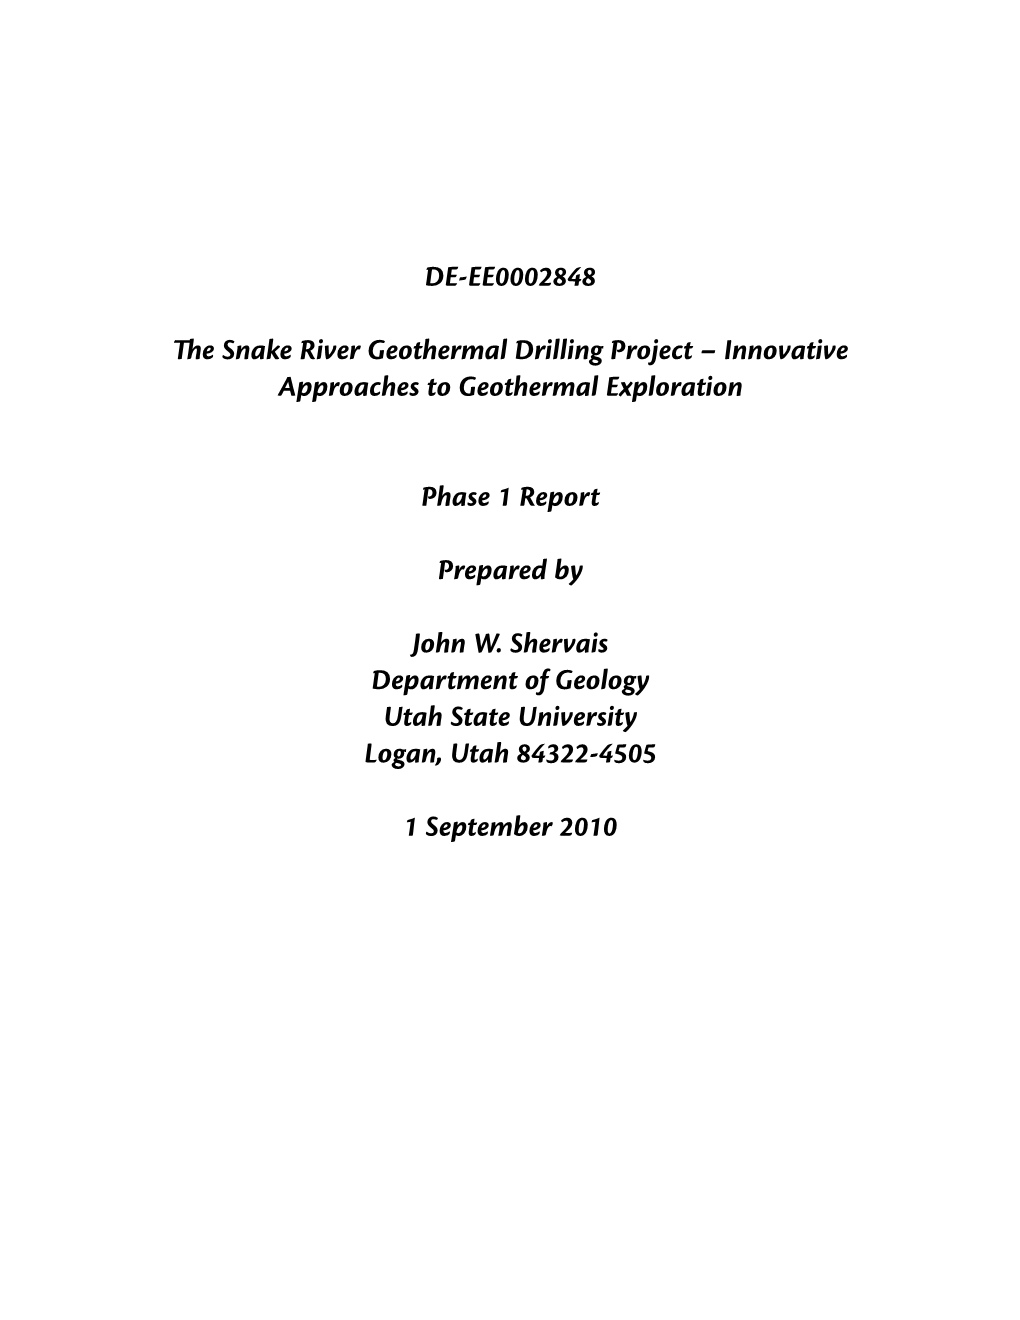 DE-EE0002848 E Snake River Geothermal Drilling Project